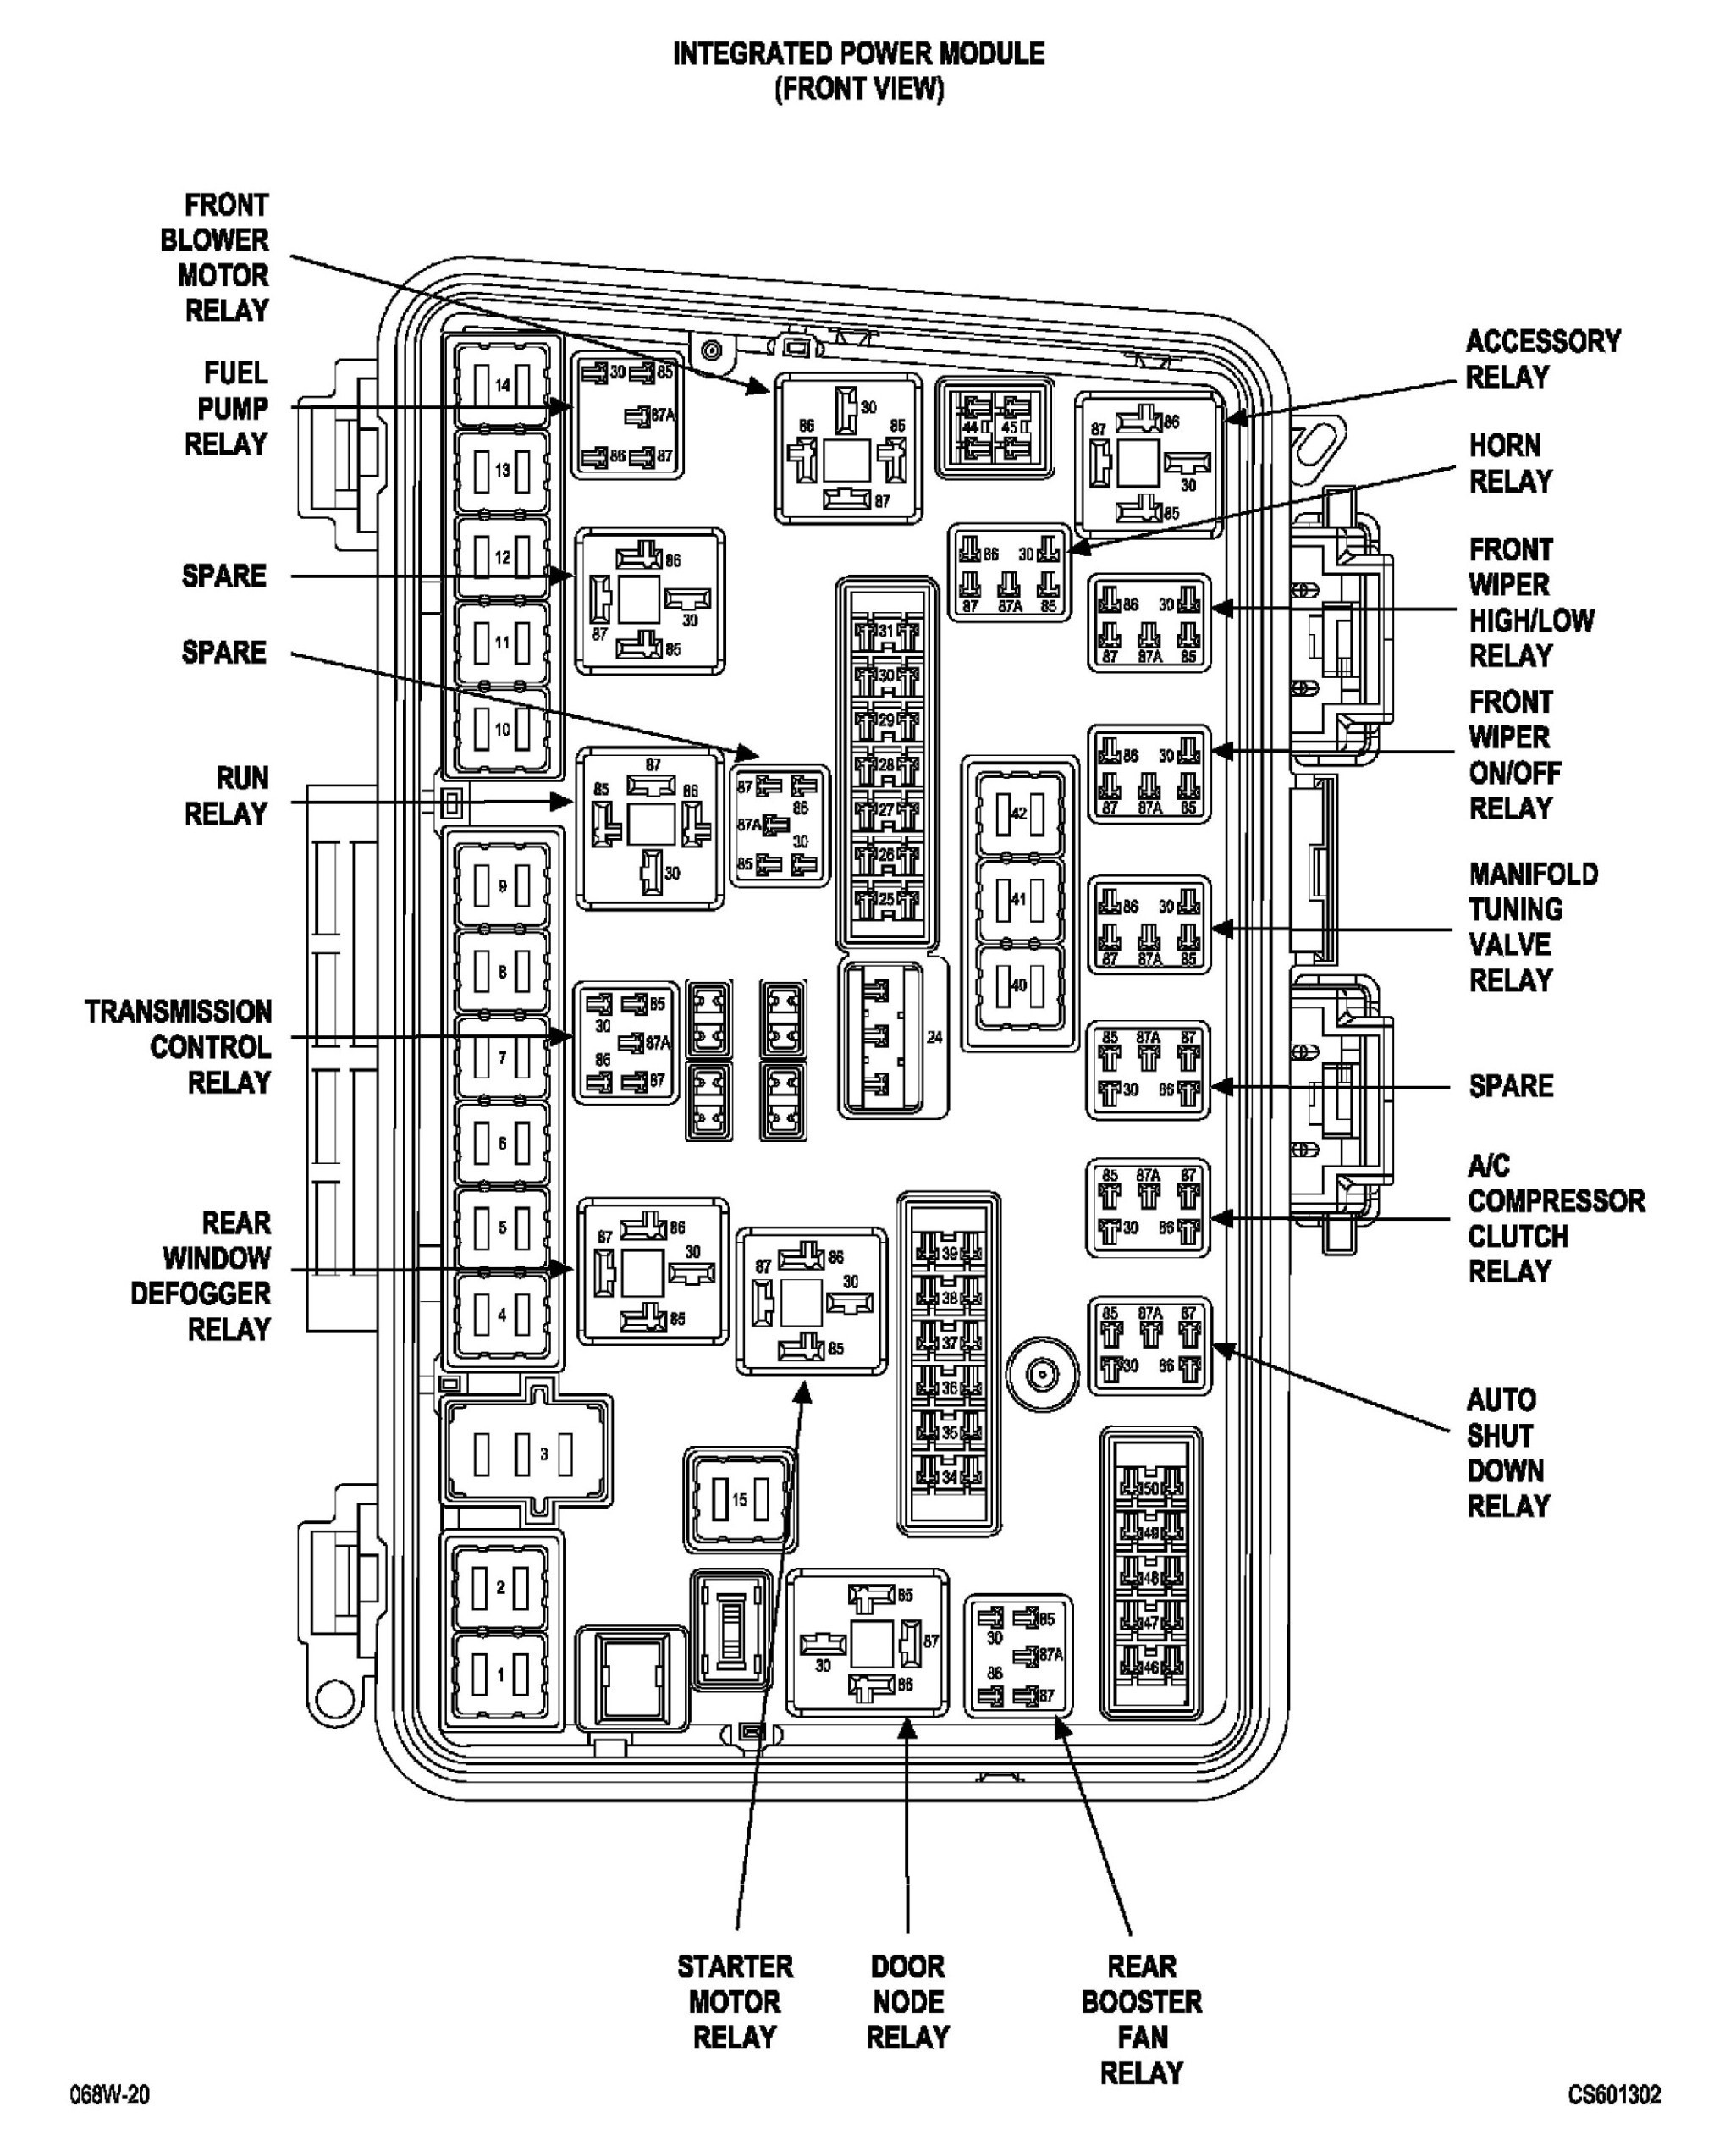 2006 Chrysler 300 Engine Diagram Chrysler Fuse Diagram Wiring Diagram Of 2006 Chrysler 300 Engine Diagram